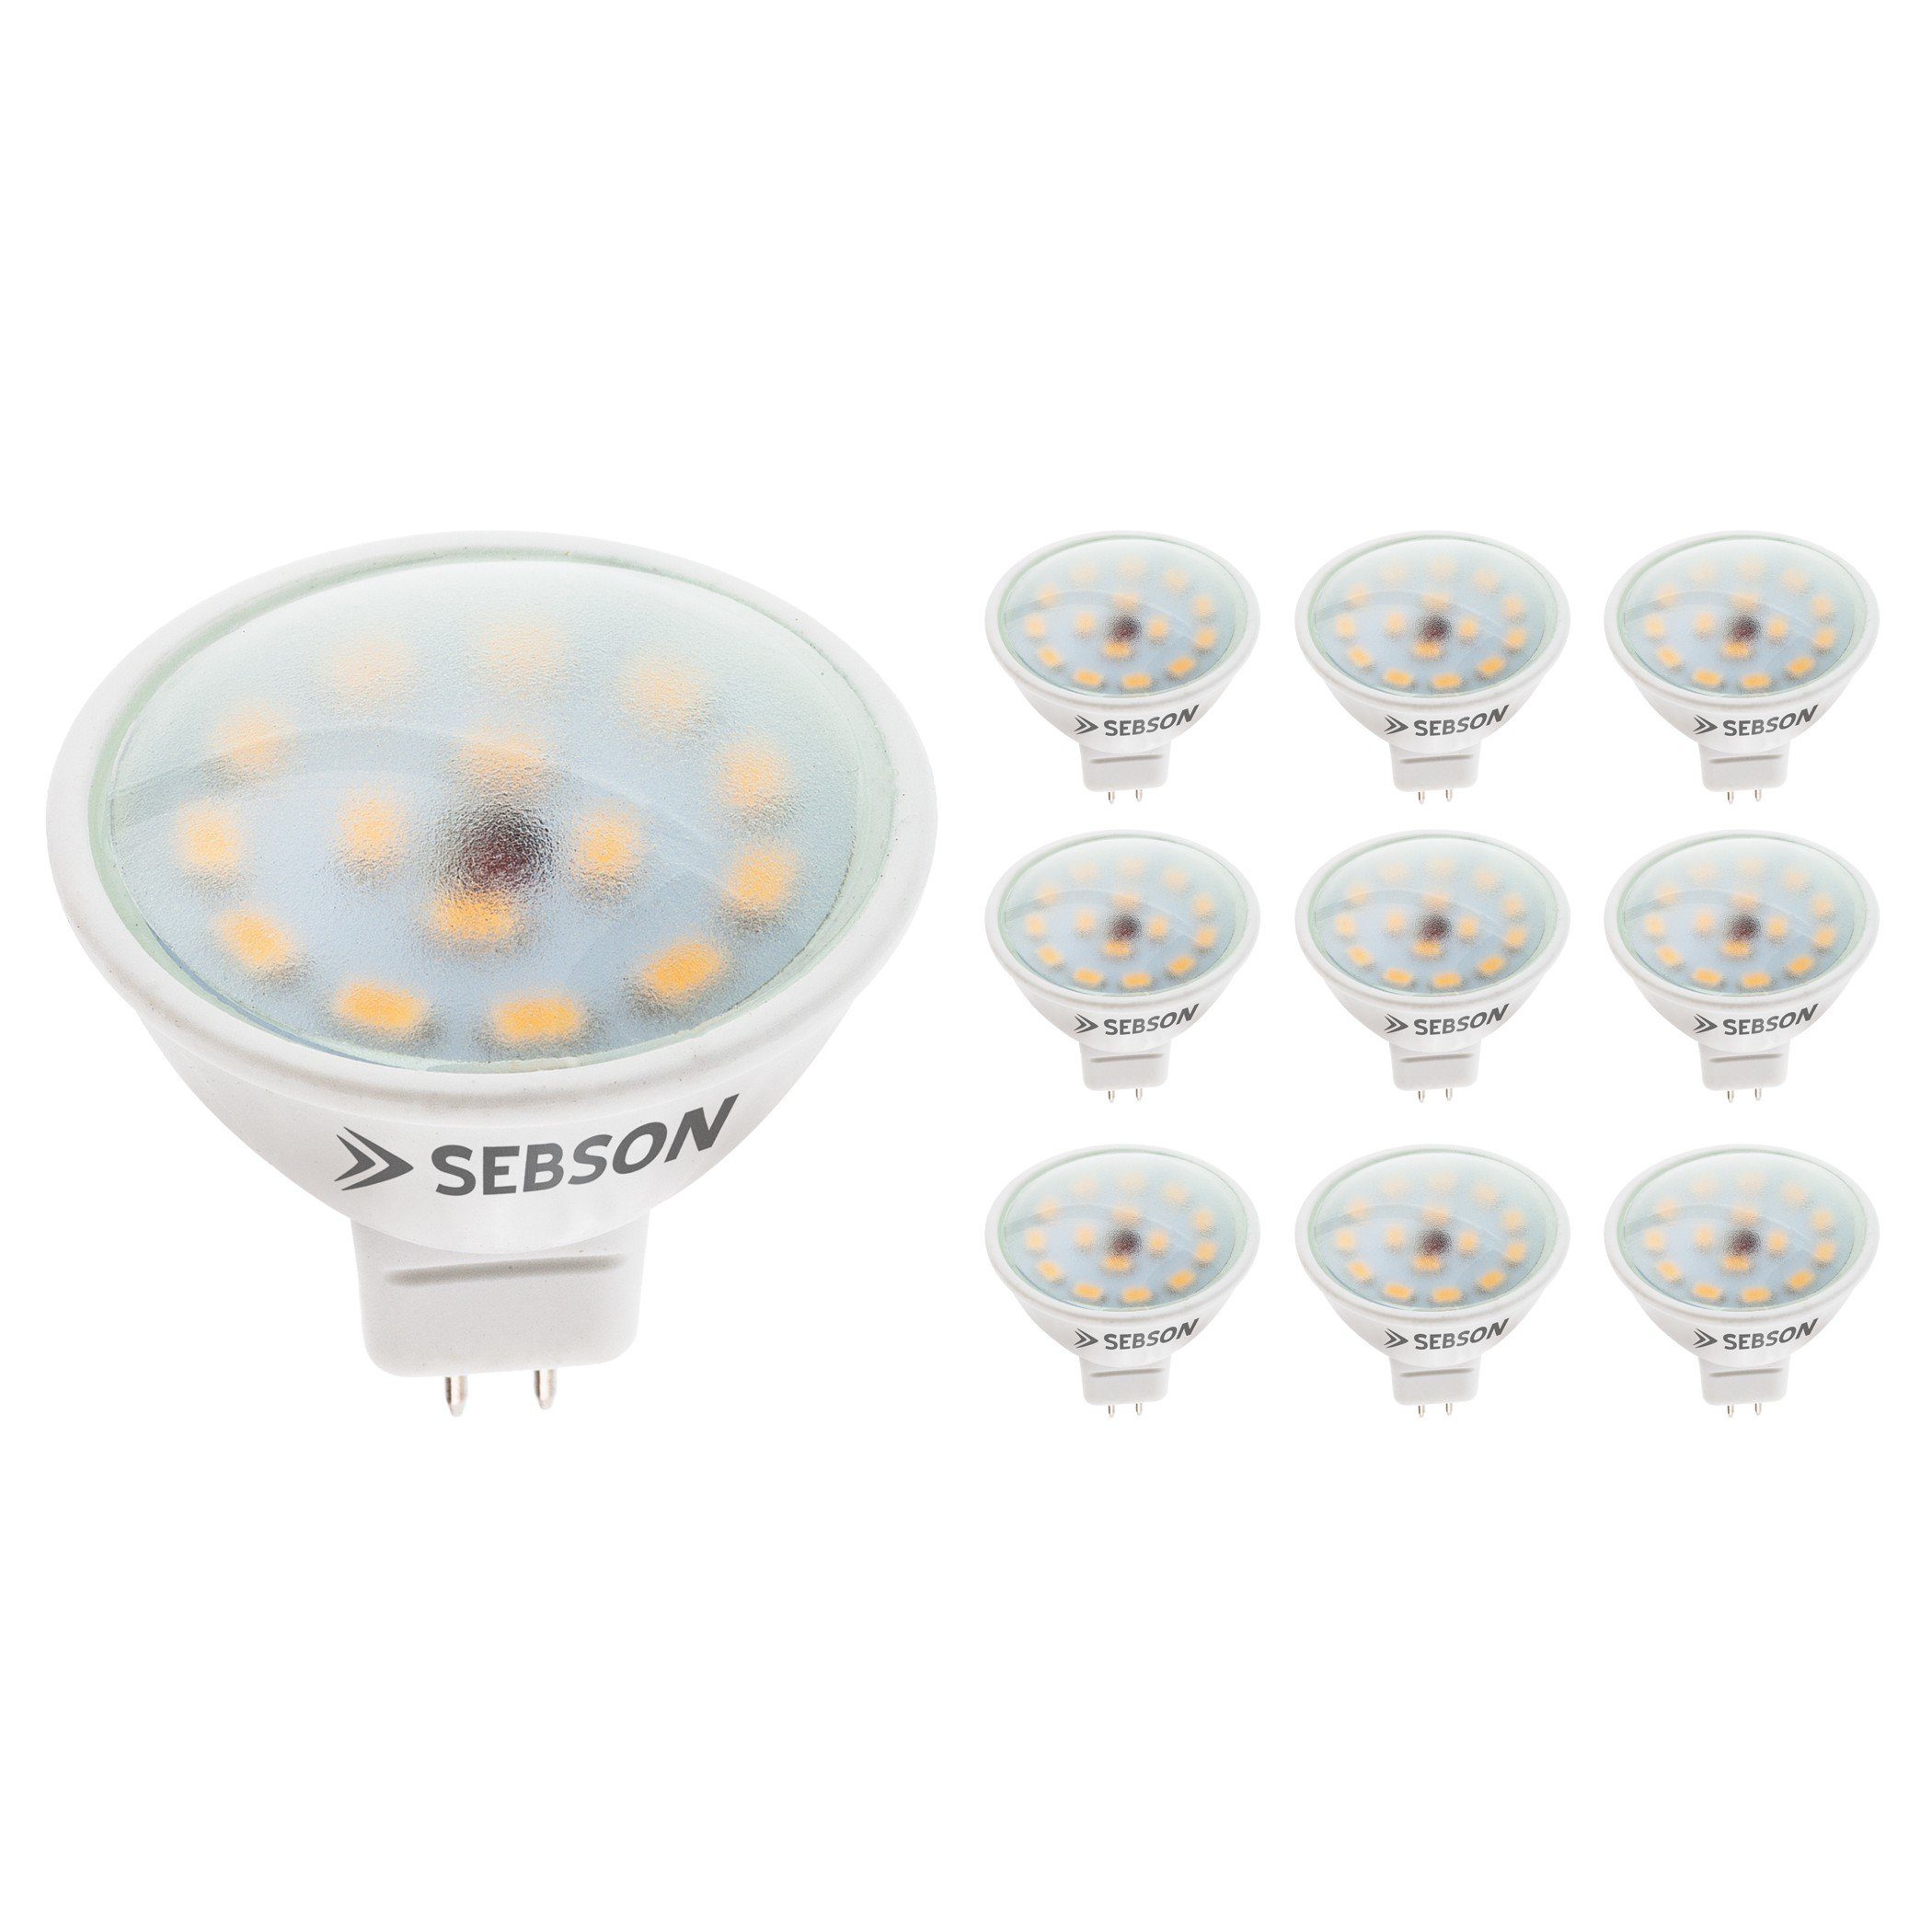 SEBSON LED-Leuchtmittel LED Lampe GU5.3 / MR16 warmweiß 5W 12V DC Луковицы - 10er Pack